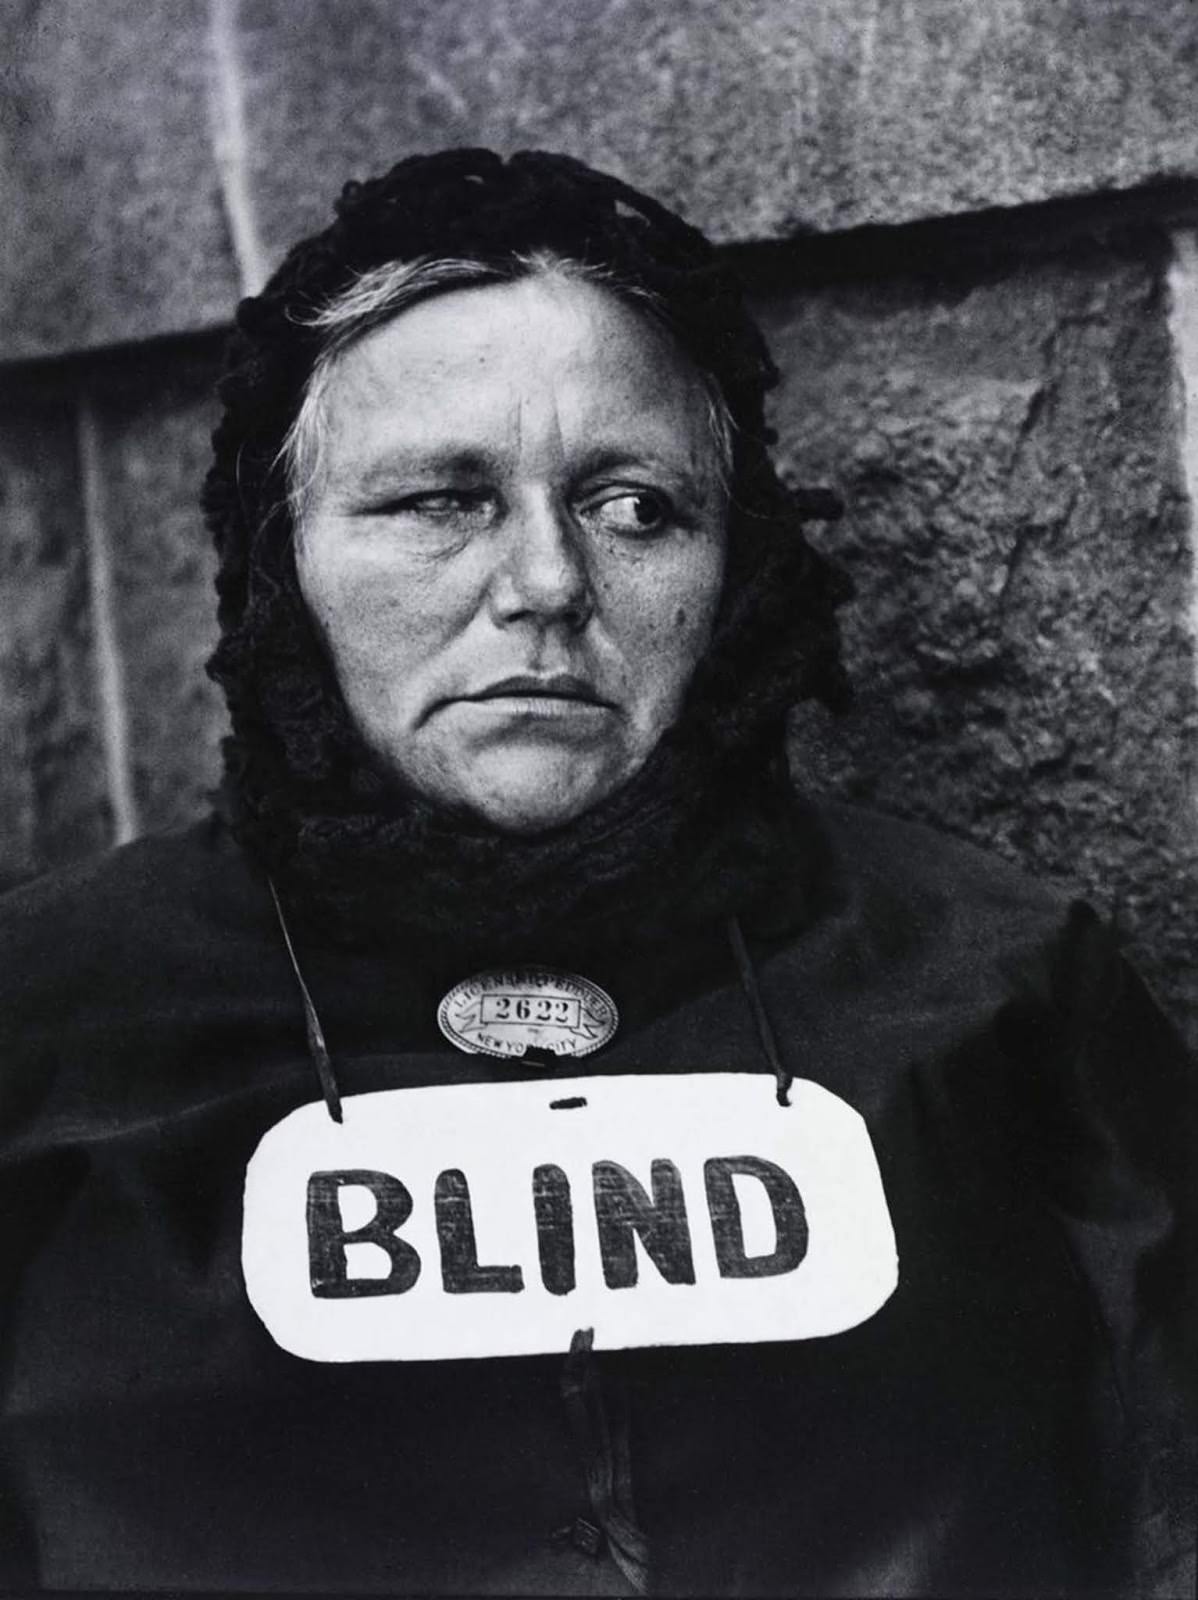 Blind, 1916